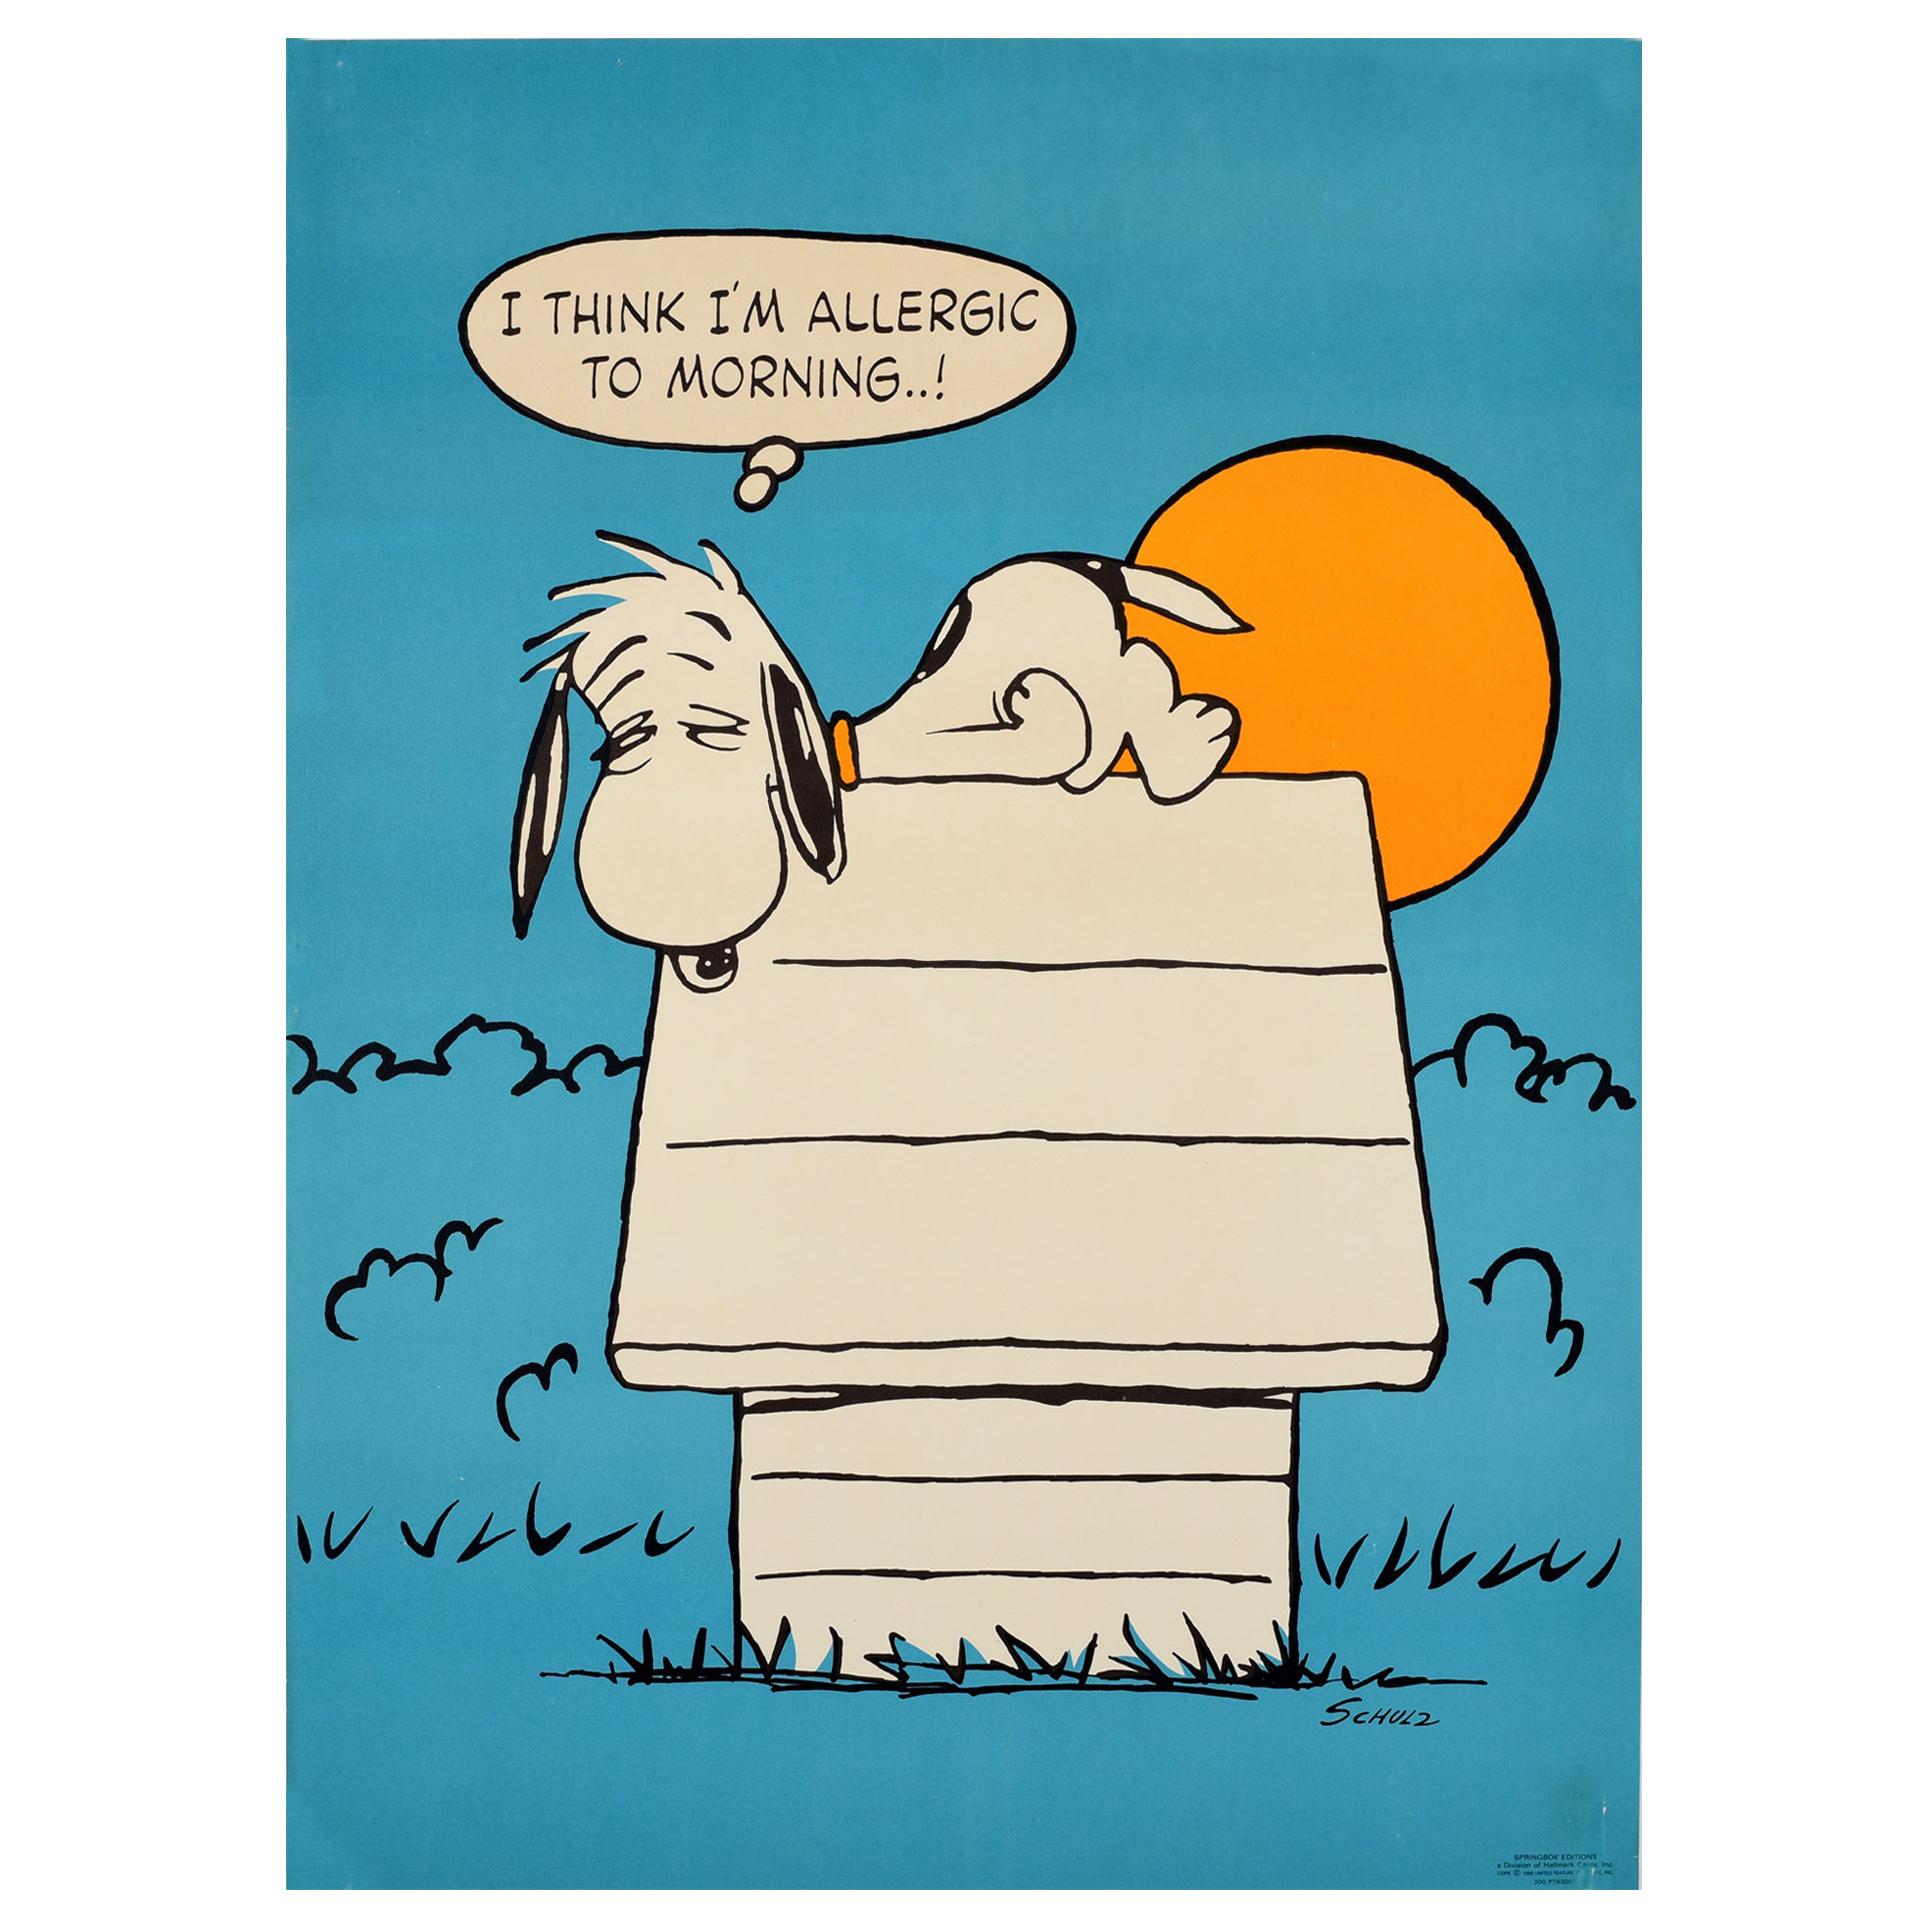 Original Vintage Cartoon Dog Snoopy Poster "I Think I'm Allergic to Morning..!"